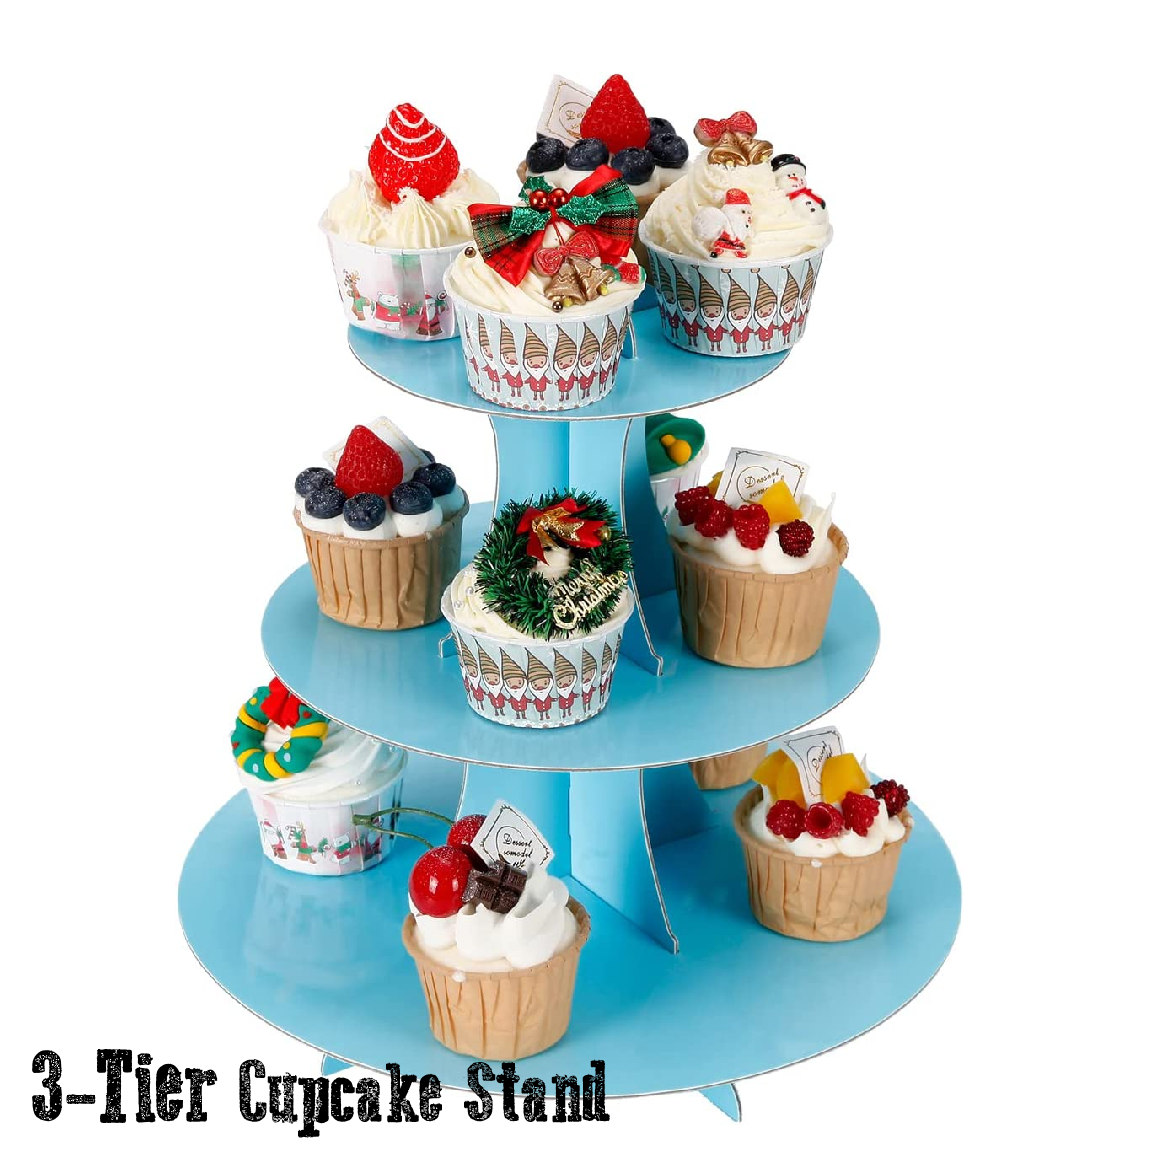 Cupcake Stand/Tower - 3 Tier Cupcake Display - Cardboard - Blue